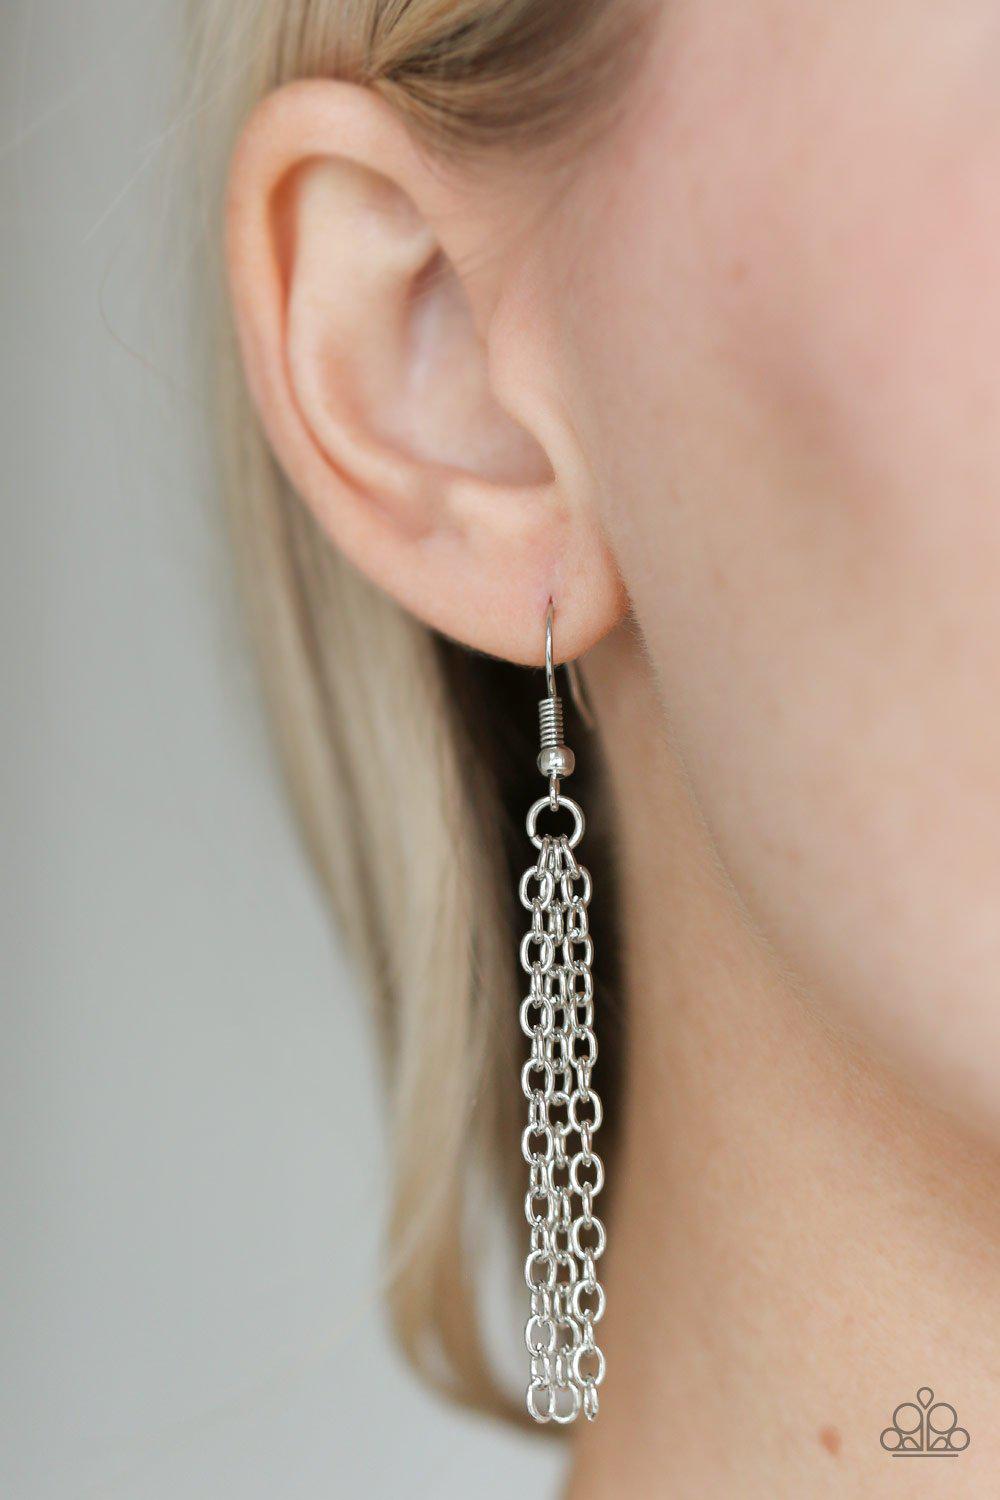 Viva La Vivid Orange Necklace - Paparazzi Accessories - free matching earrings -CarasShop.com - $5 Jewelry by Cara Jewels